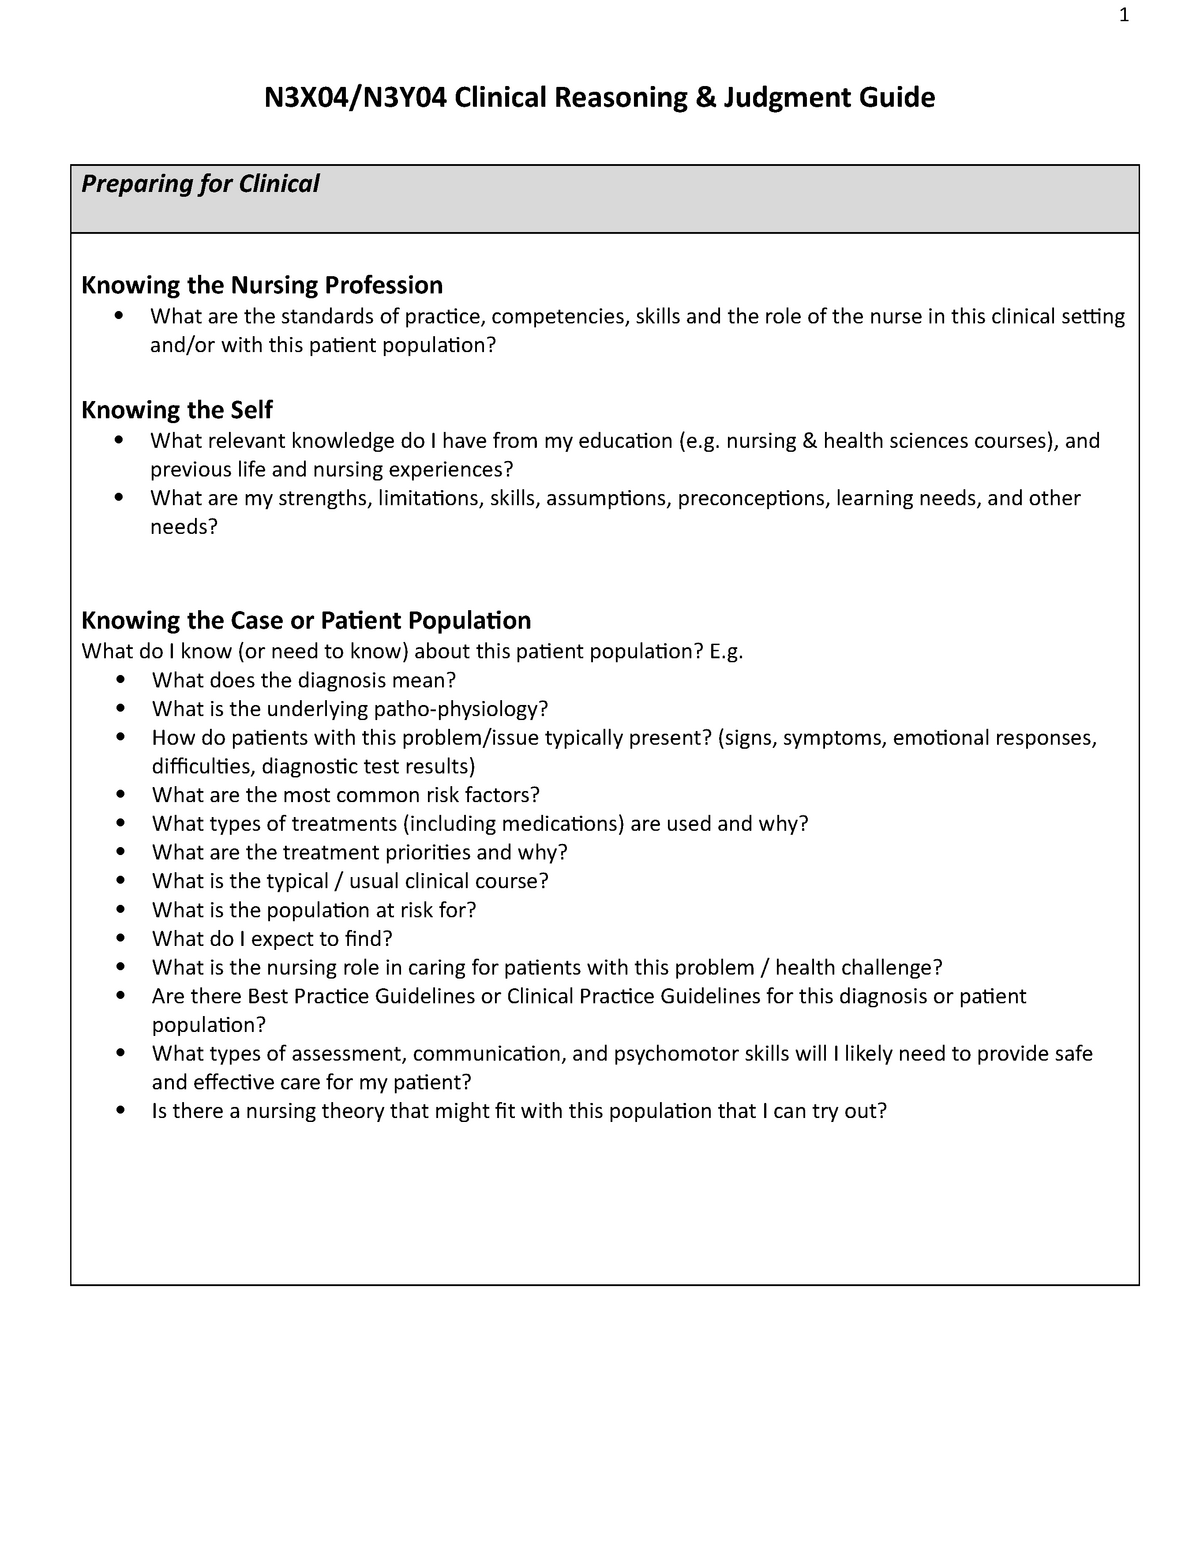 Clinical Reasoning Worksheet (long version)1 - StuDocu